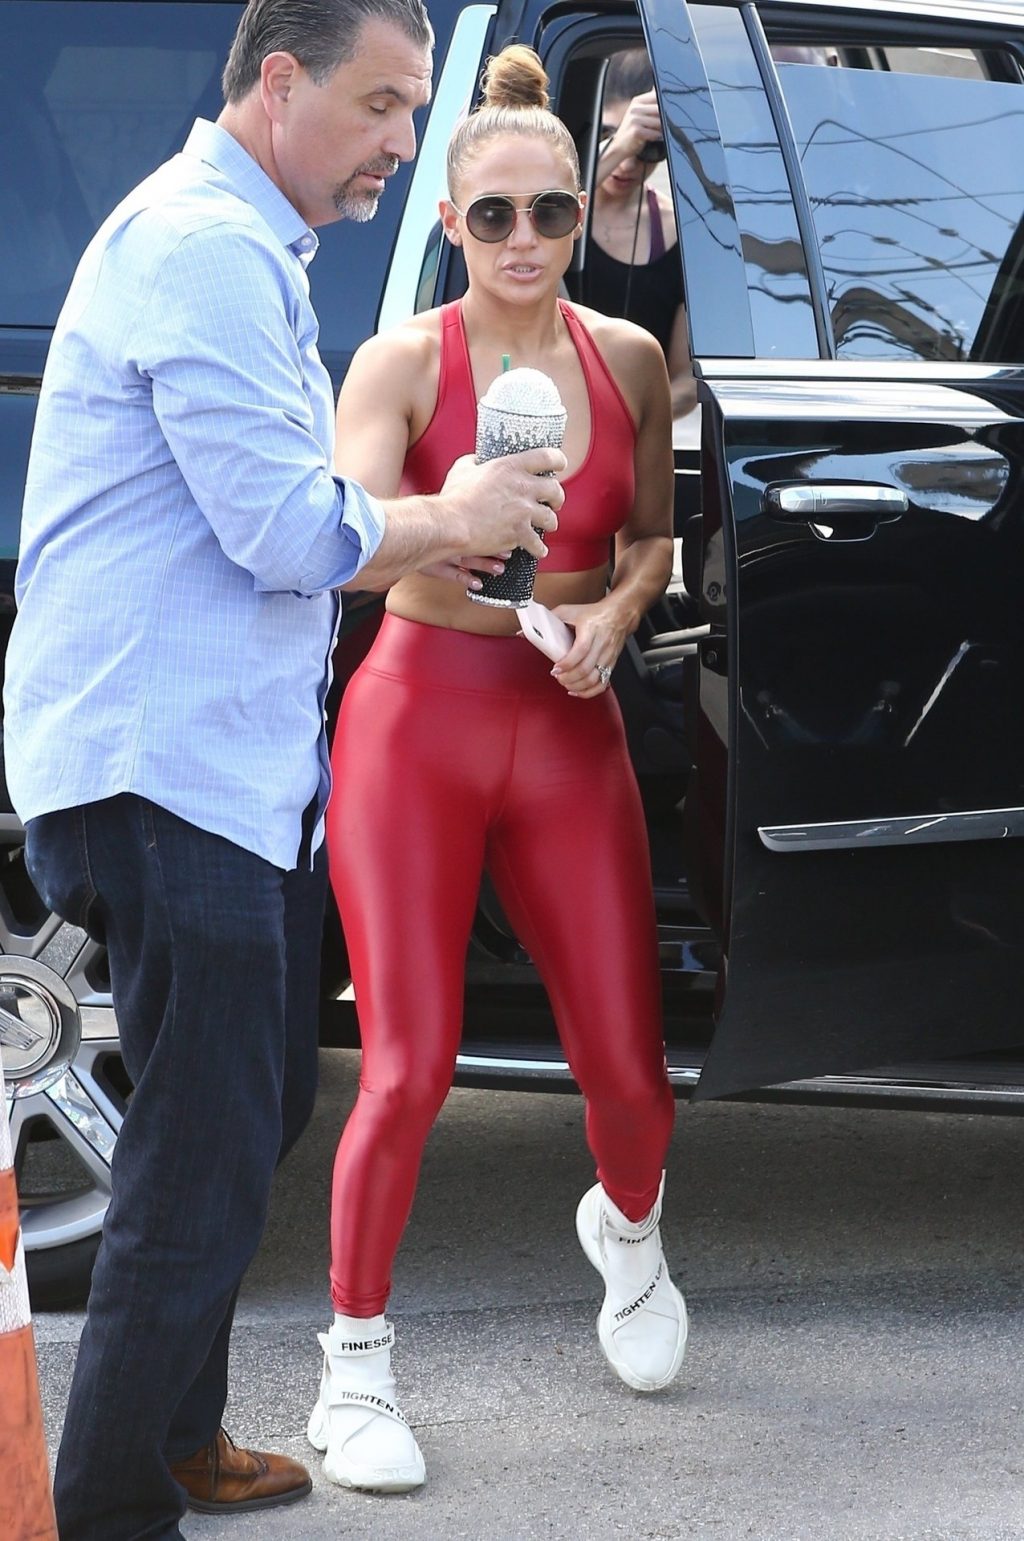 Workout Pants and Tight Camel Toe Paparazzi Pics of Jennifer Lopez celebmasta.com 2